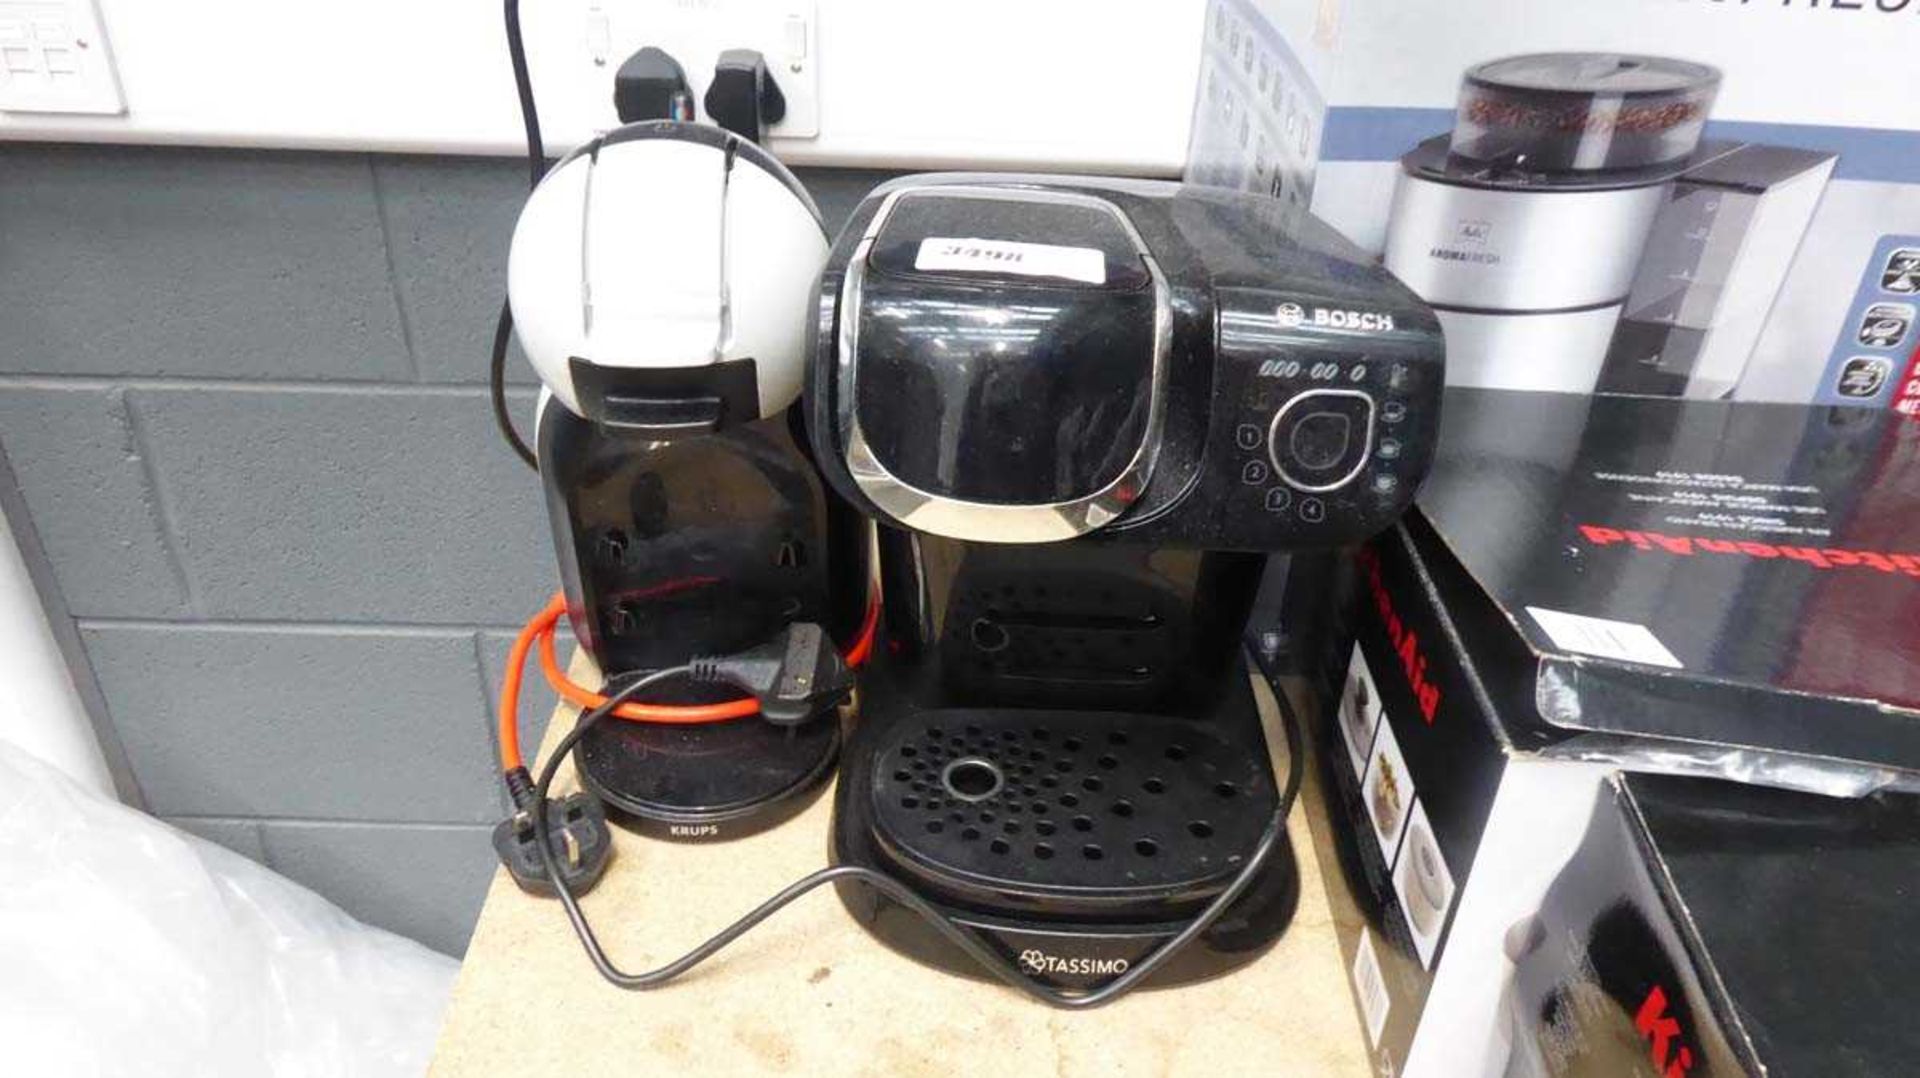 +VAT Bosch Tassimmo coffee machine, and Nescafe Dolce Gusto coffee machine